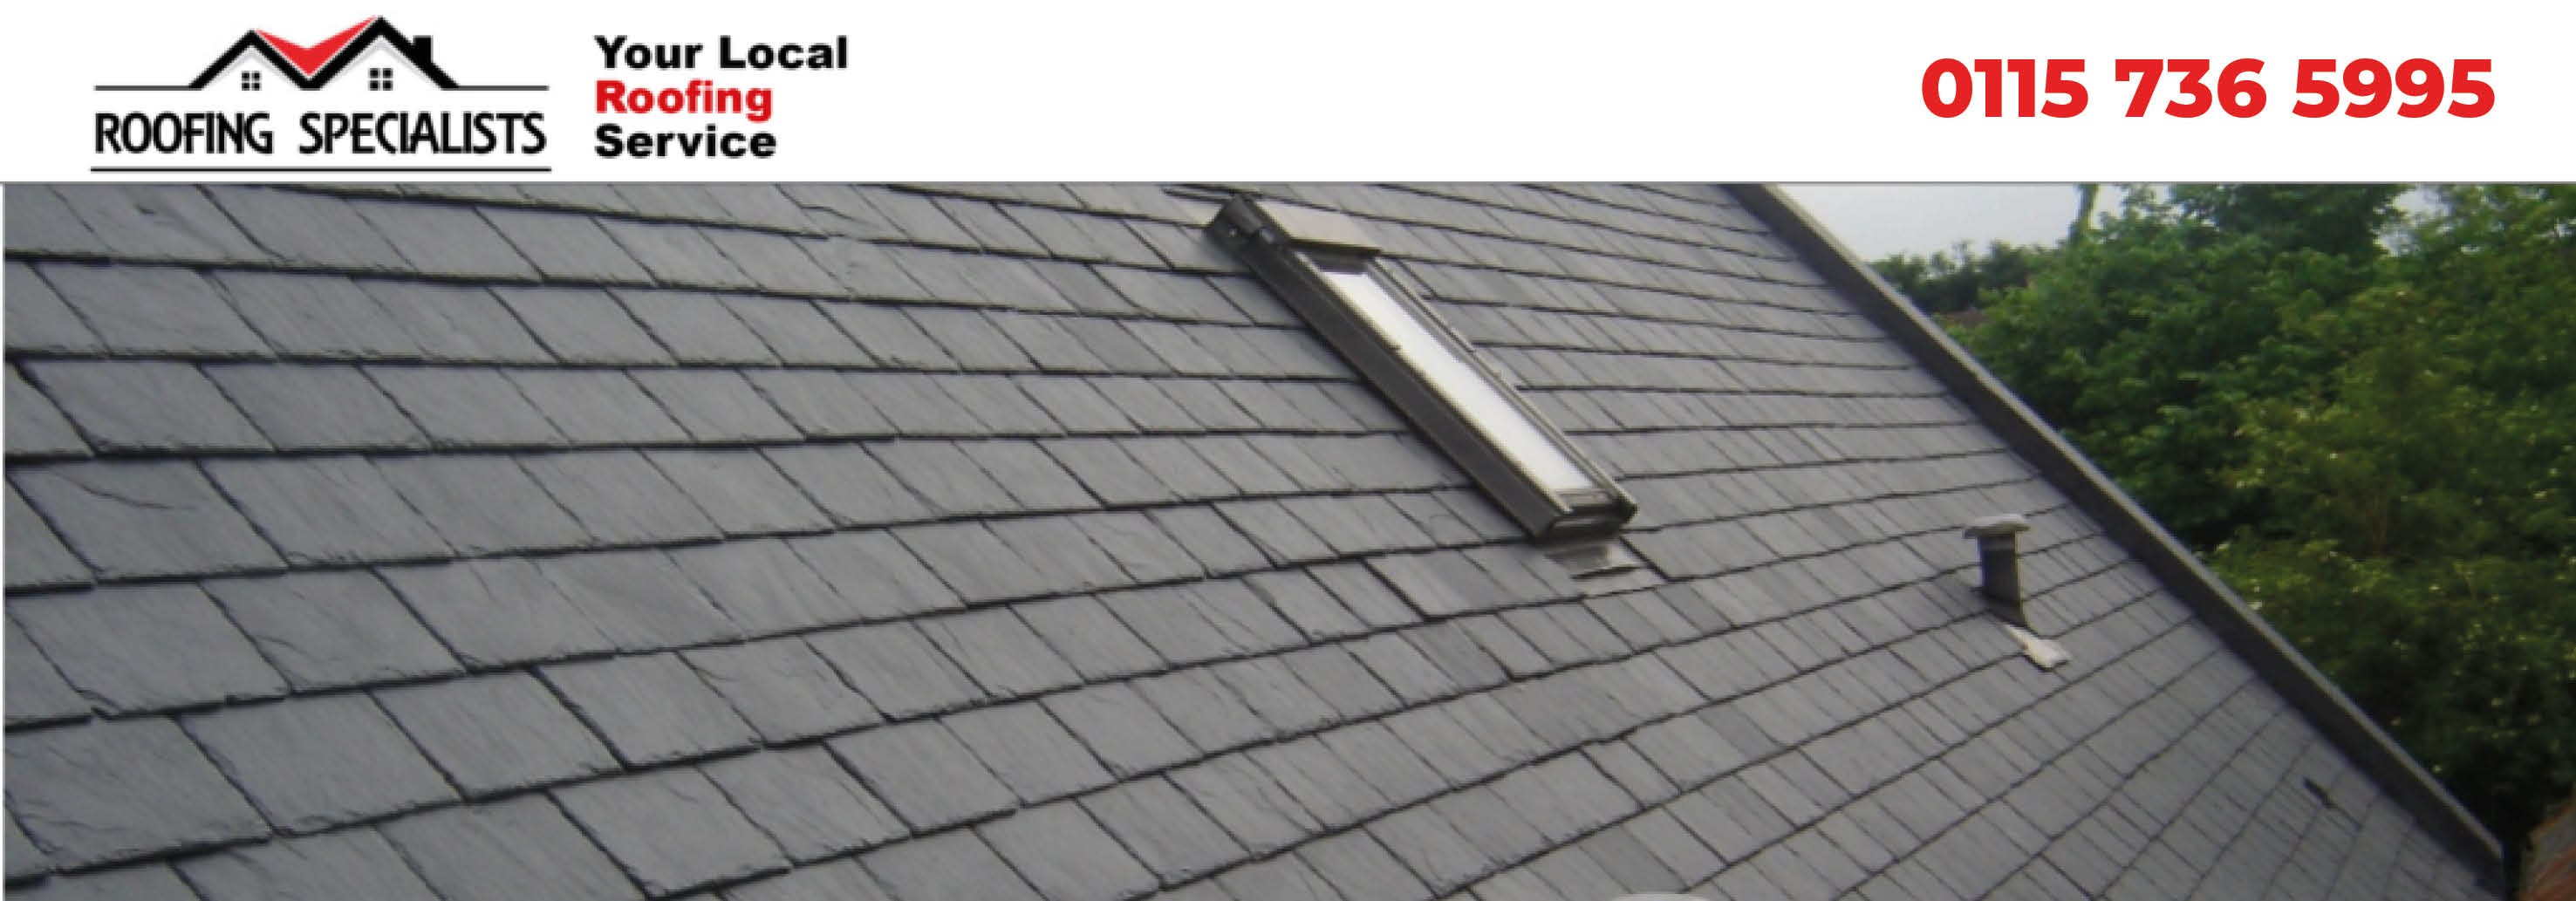 domestic roofing nottingham image header